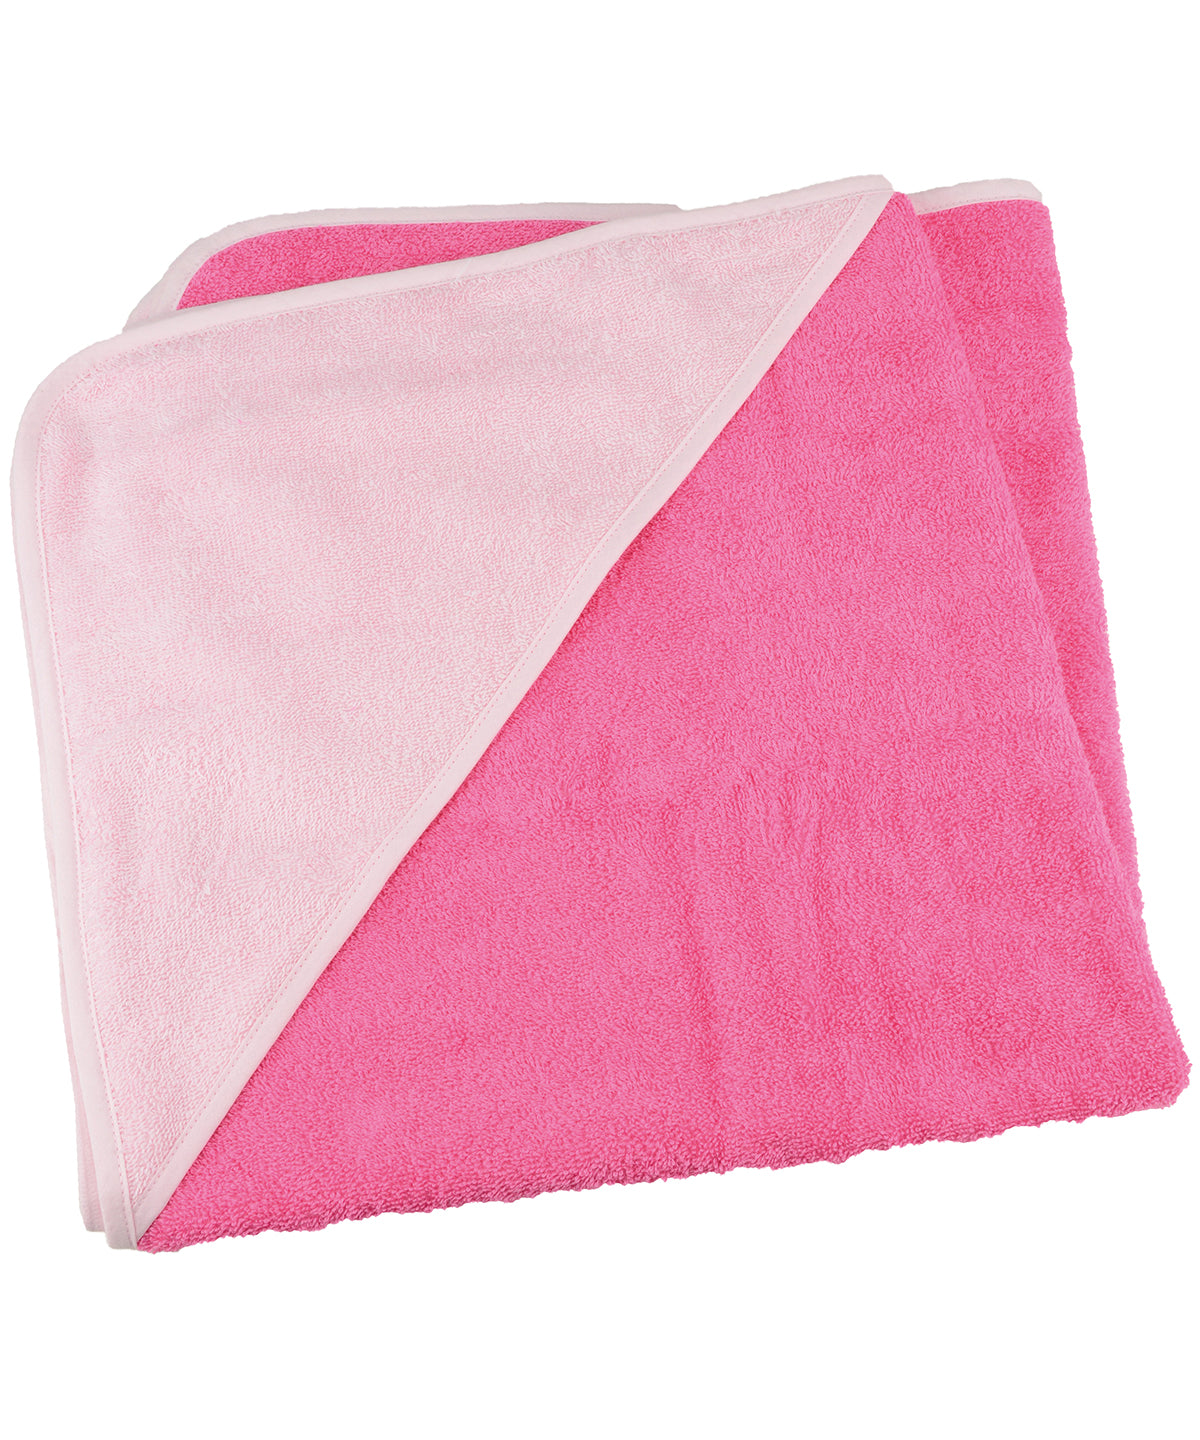 ARTG® Babiezz® medium baby hooded towel